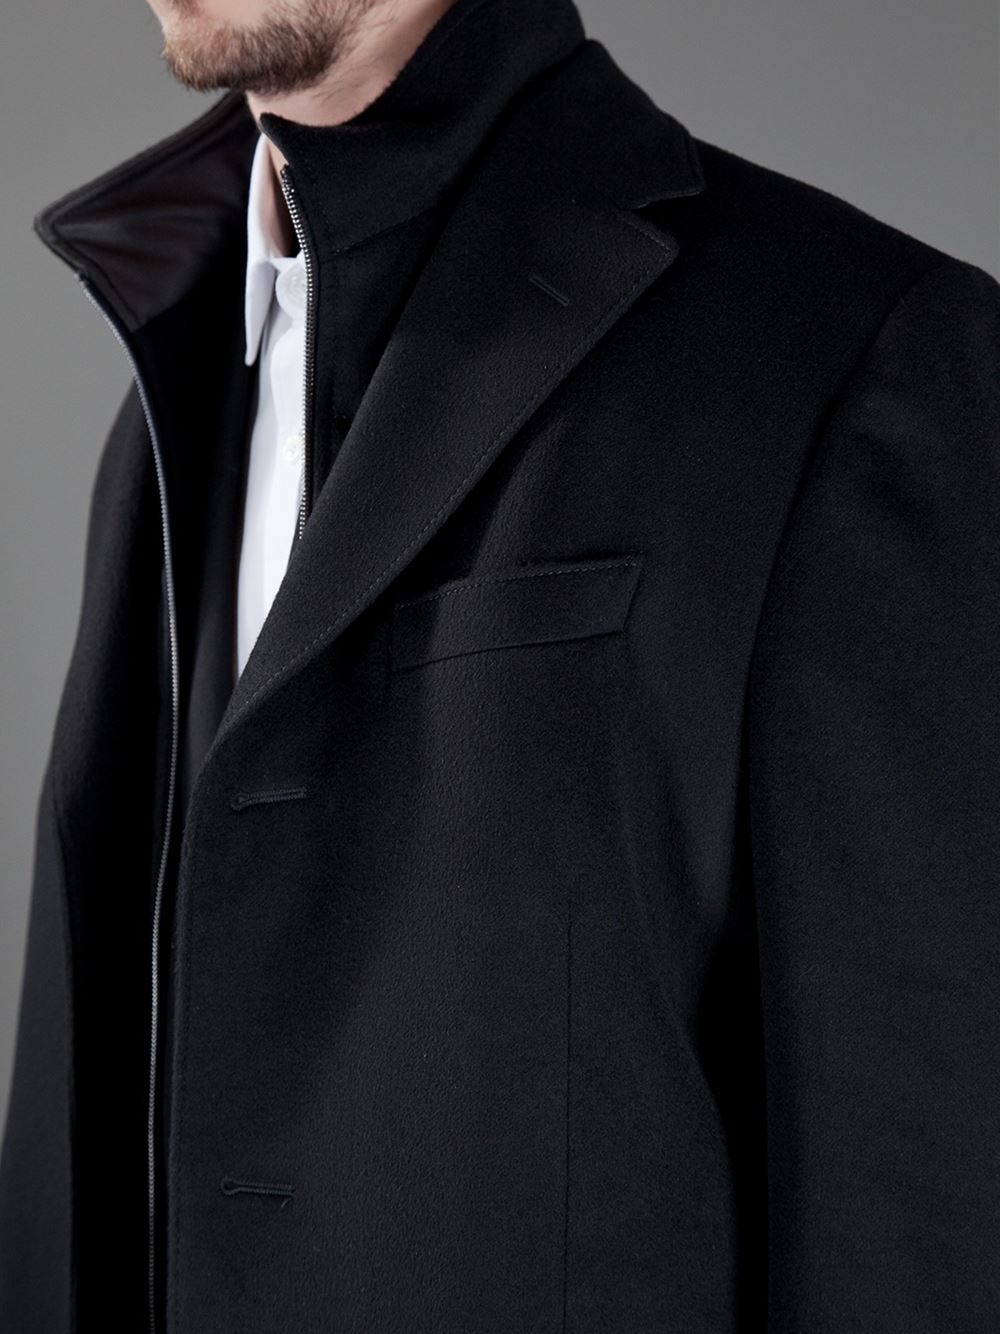 Lyst - Corneliani Singlebreasted Coat in Black for Men